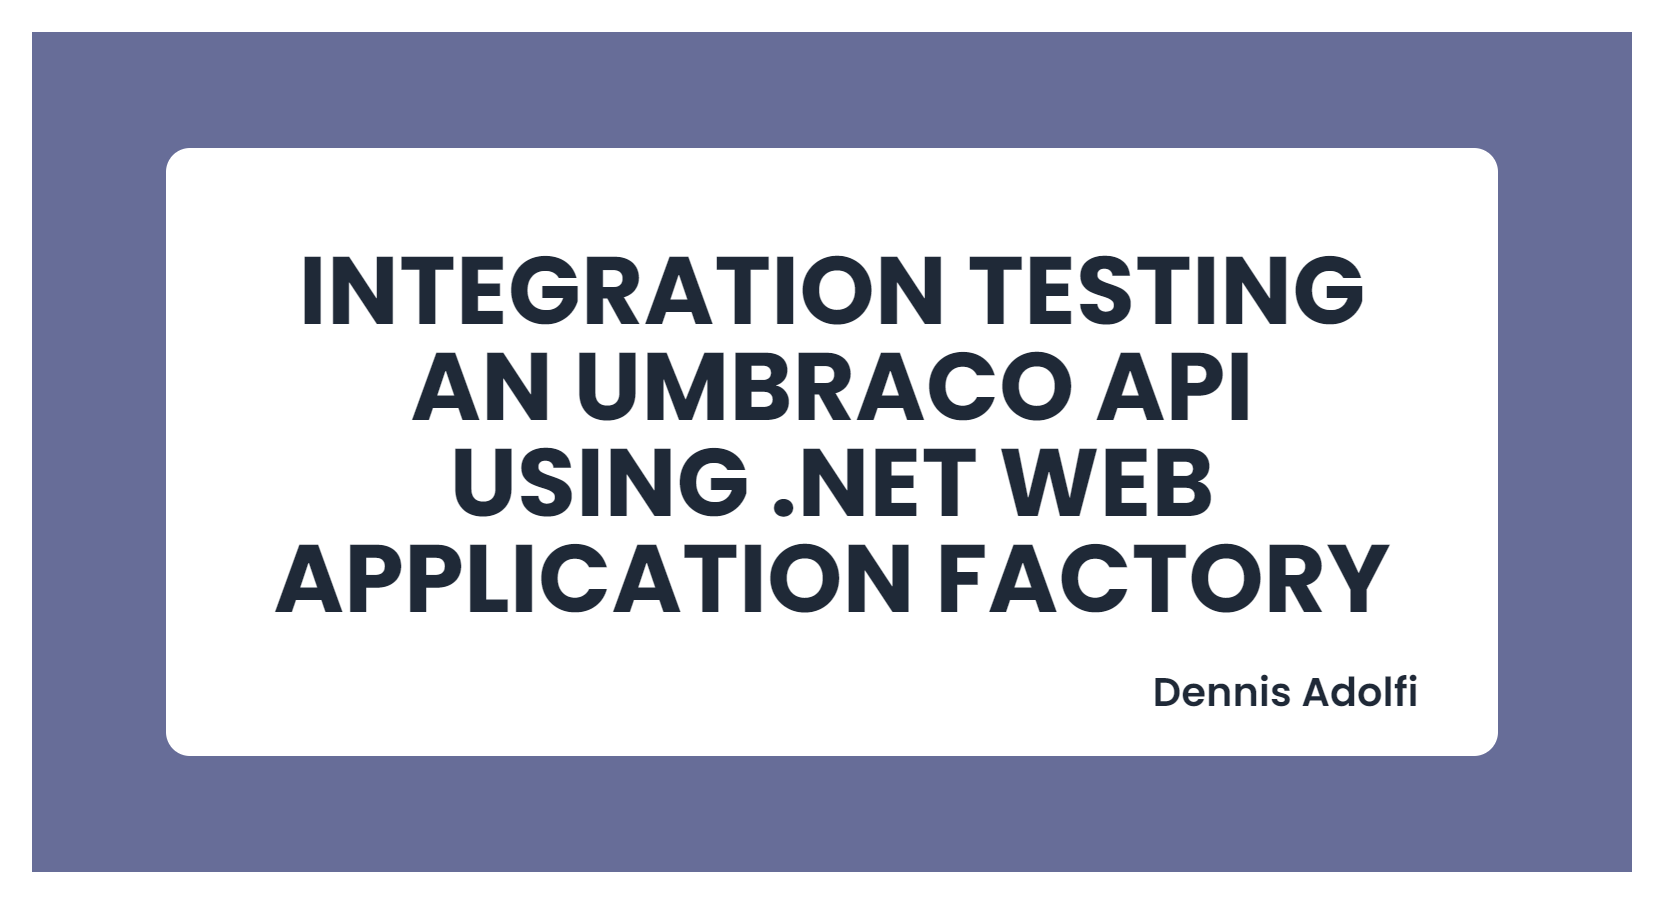 Integration Testing an Umbraco API using .NET Web Application Factory